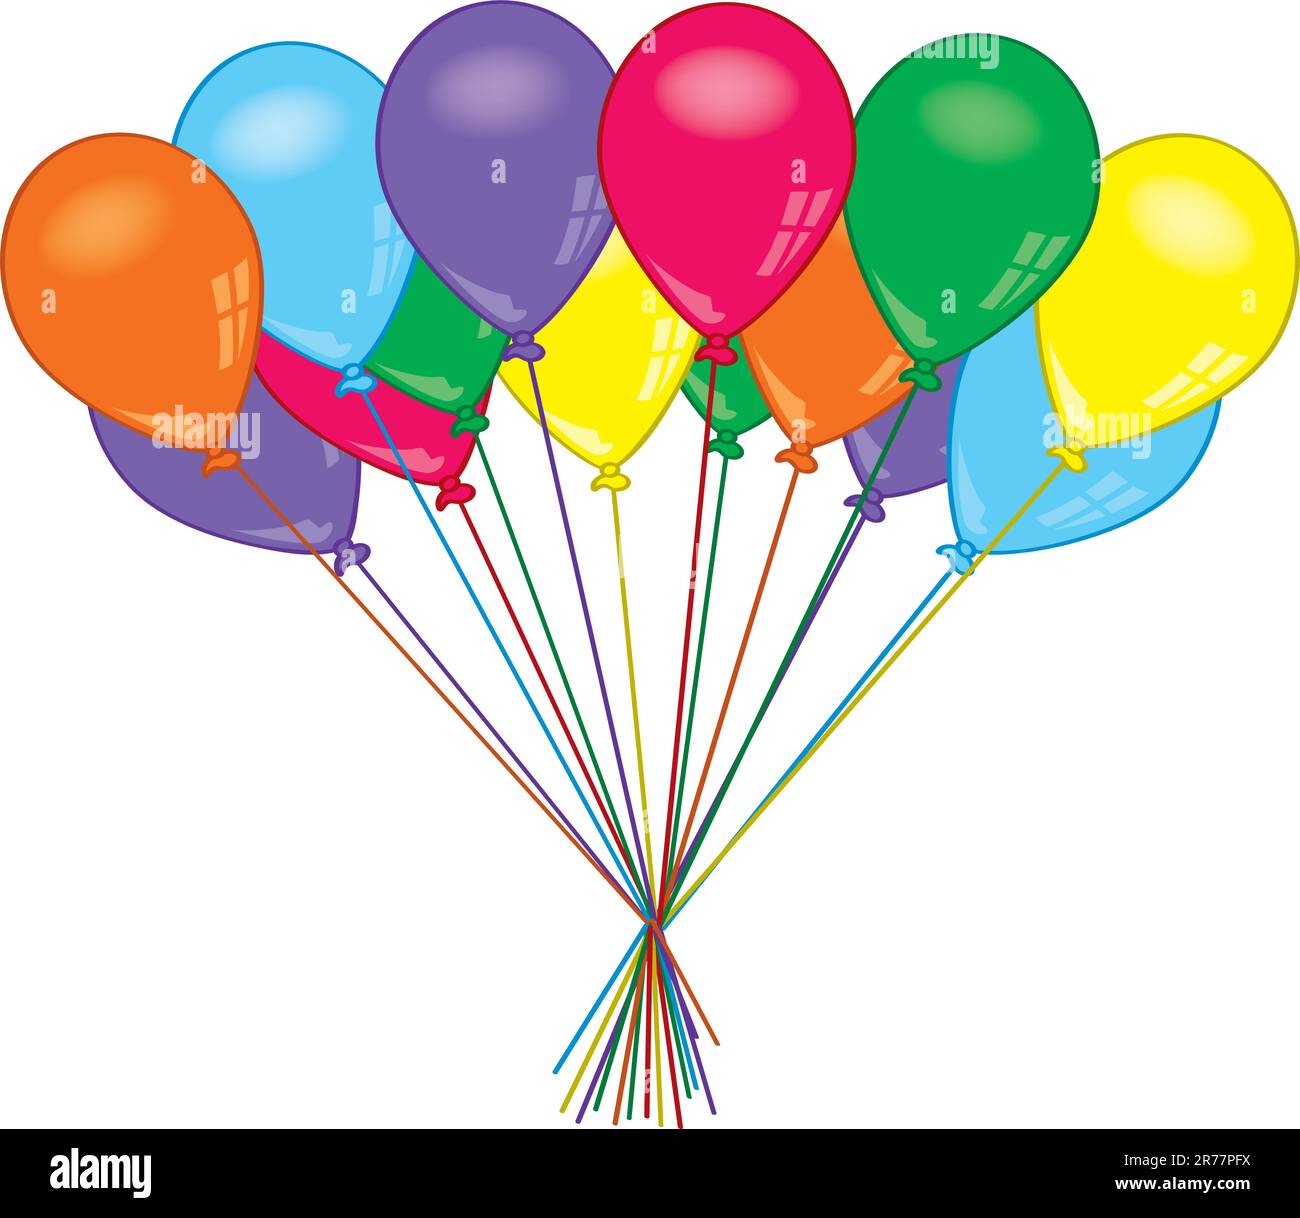 https://c8.alamy.com/comp/2R77PFX/a-bundle-of-colorful-balloons-on-strings-2R77PFX.jpg